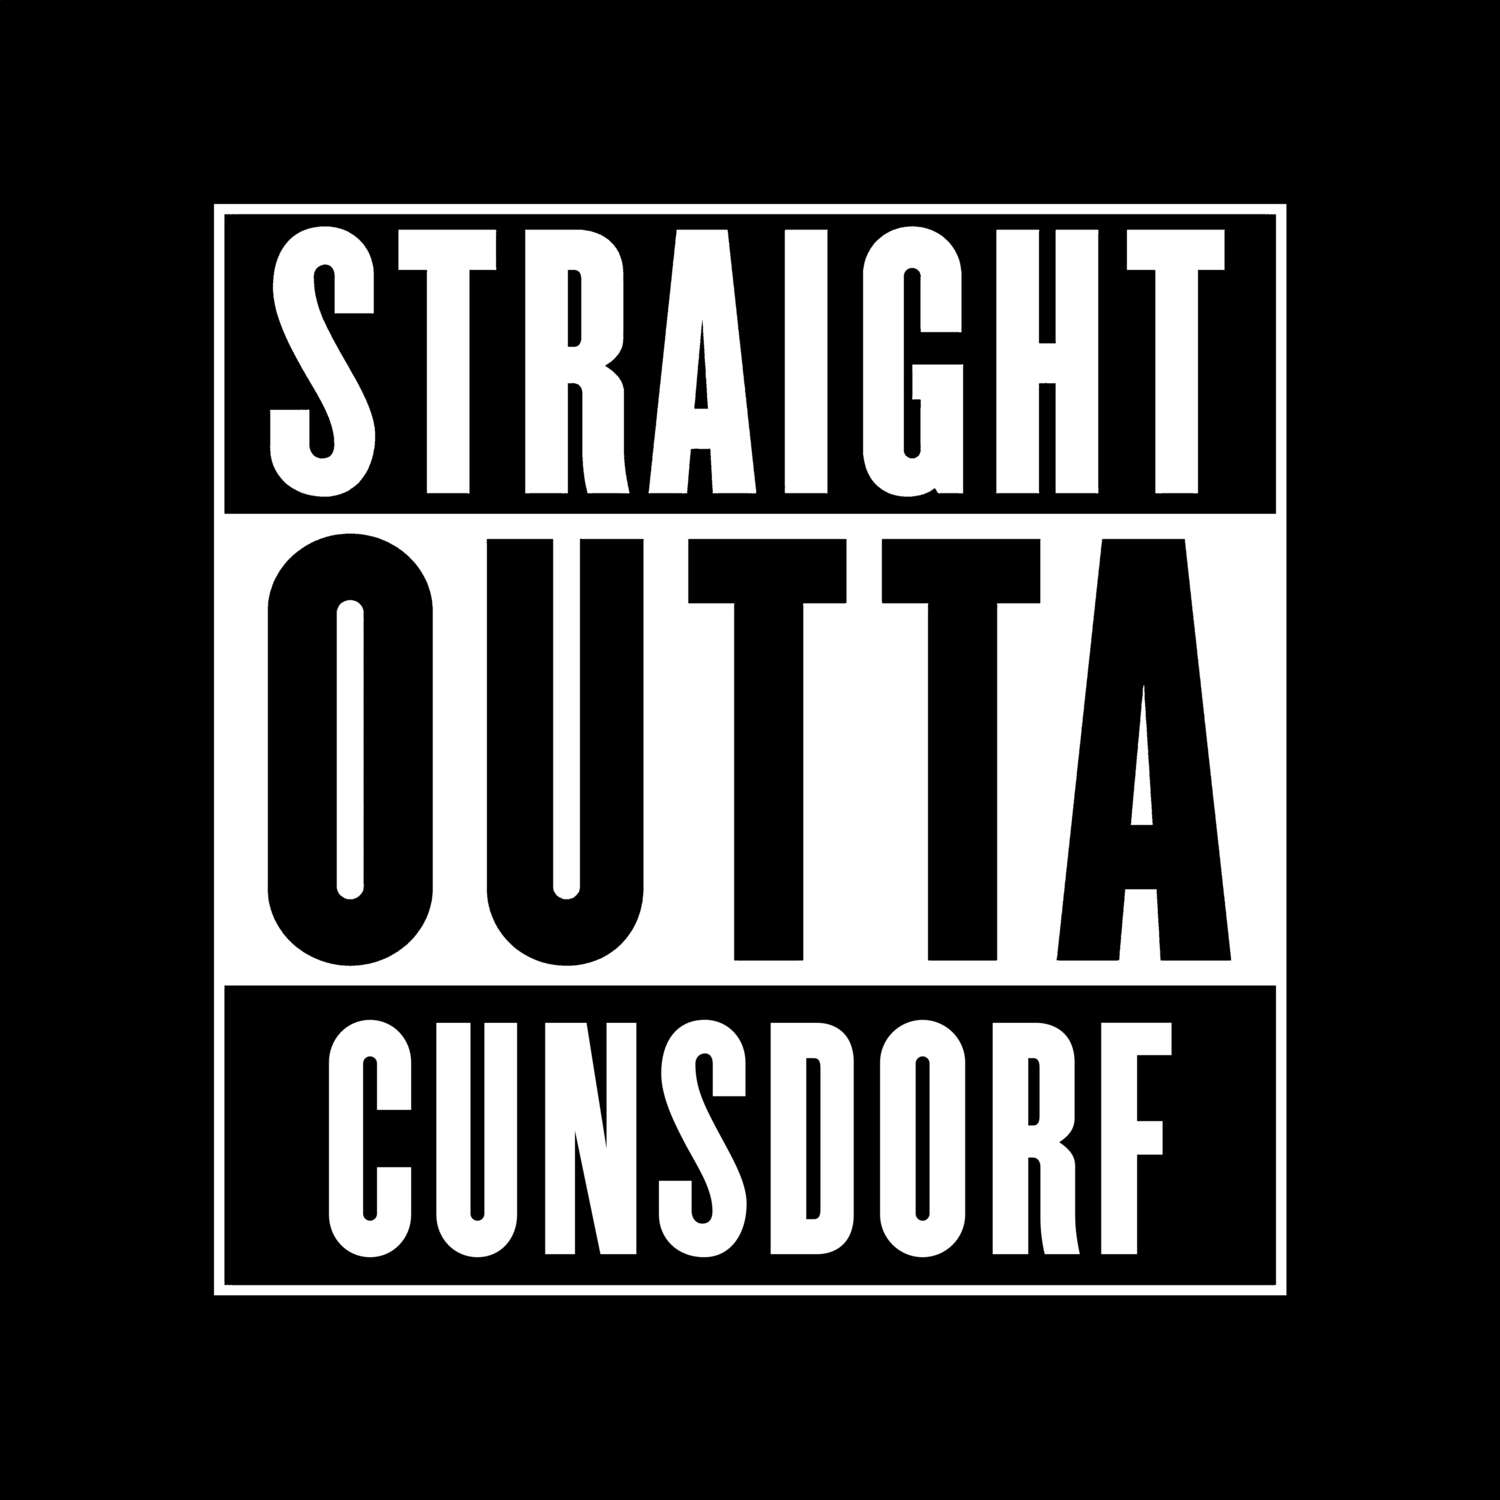 Cunsdorf T-Shirt »Straight Outta«